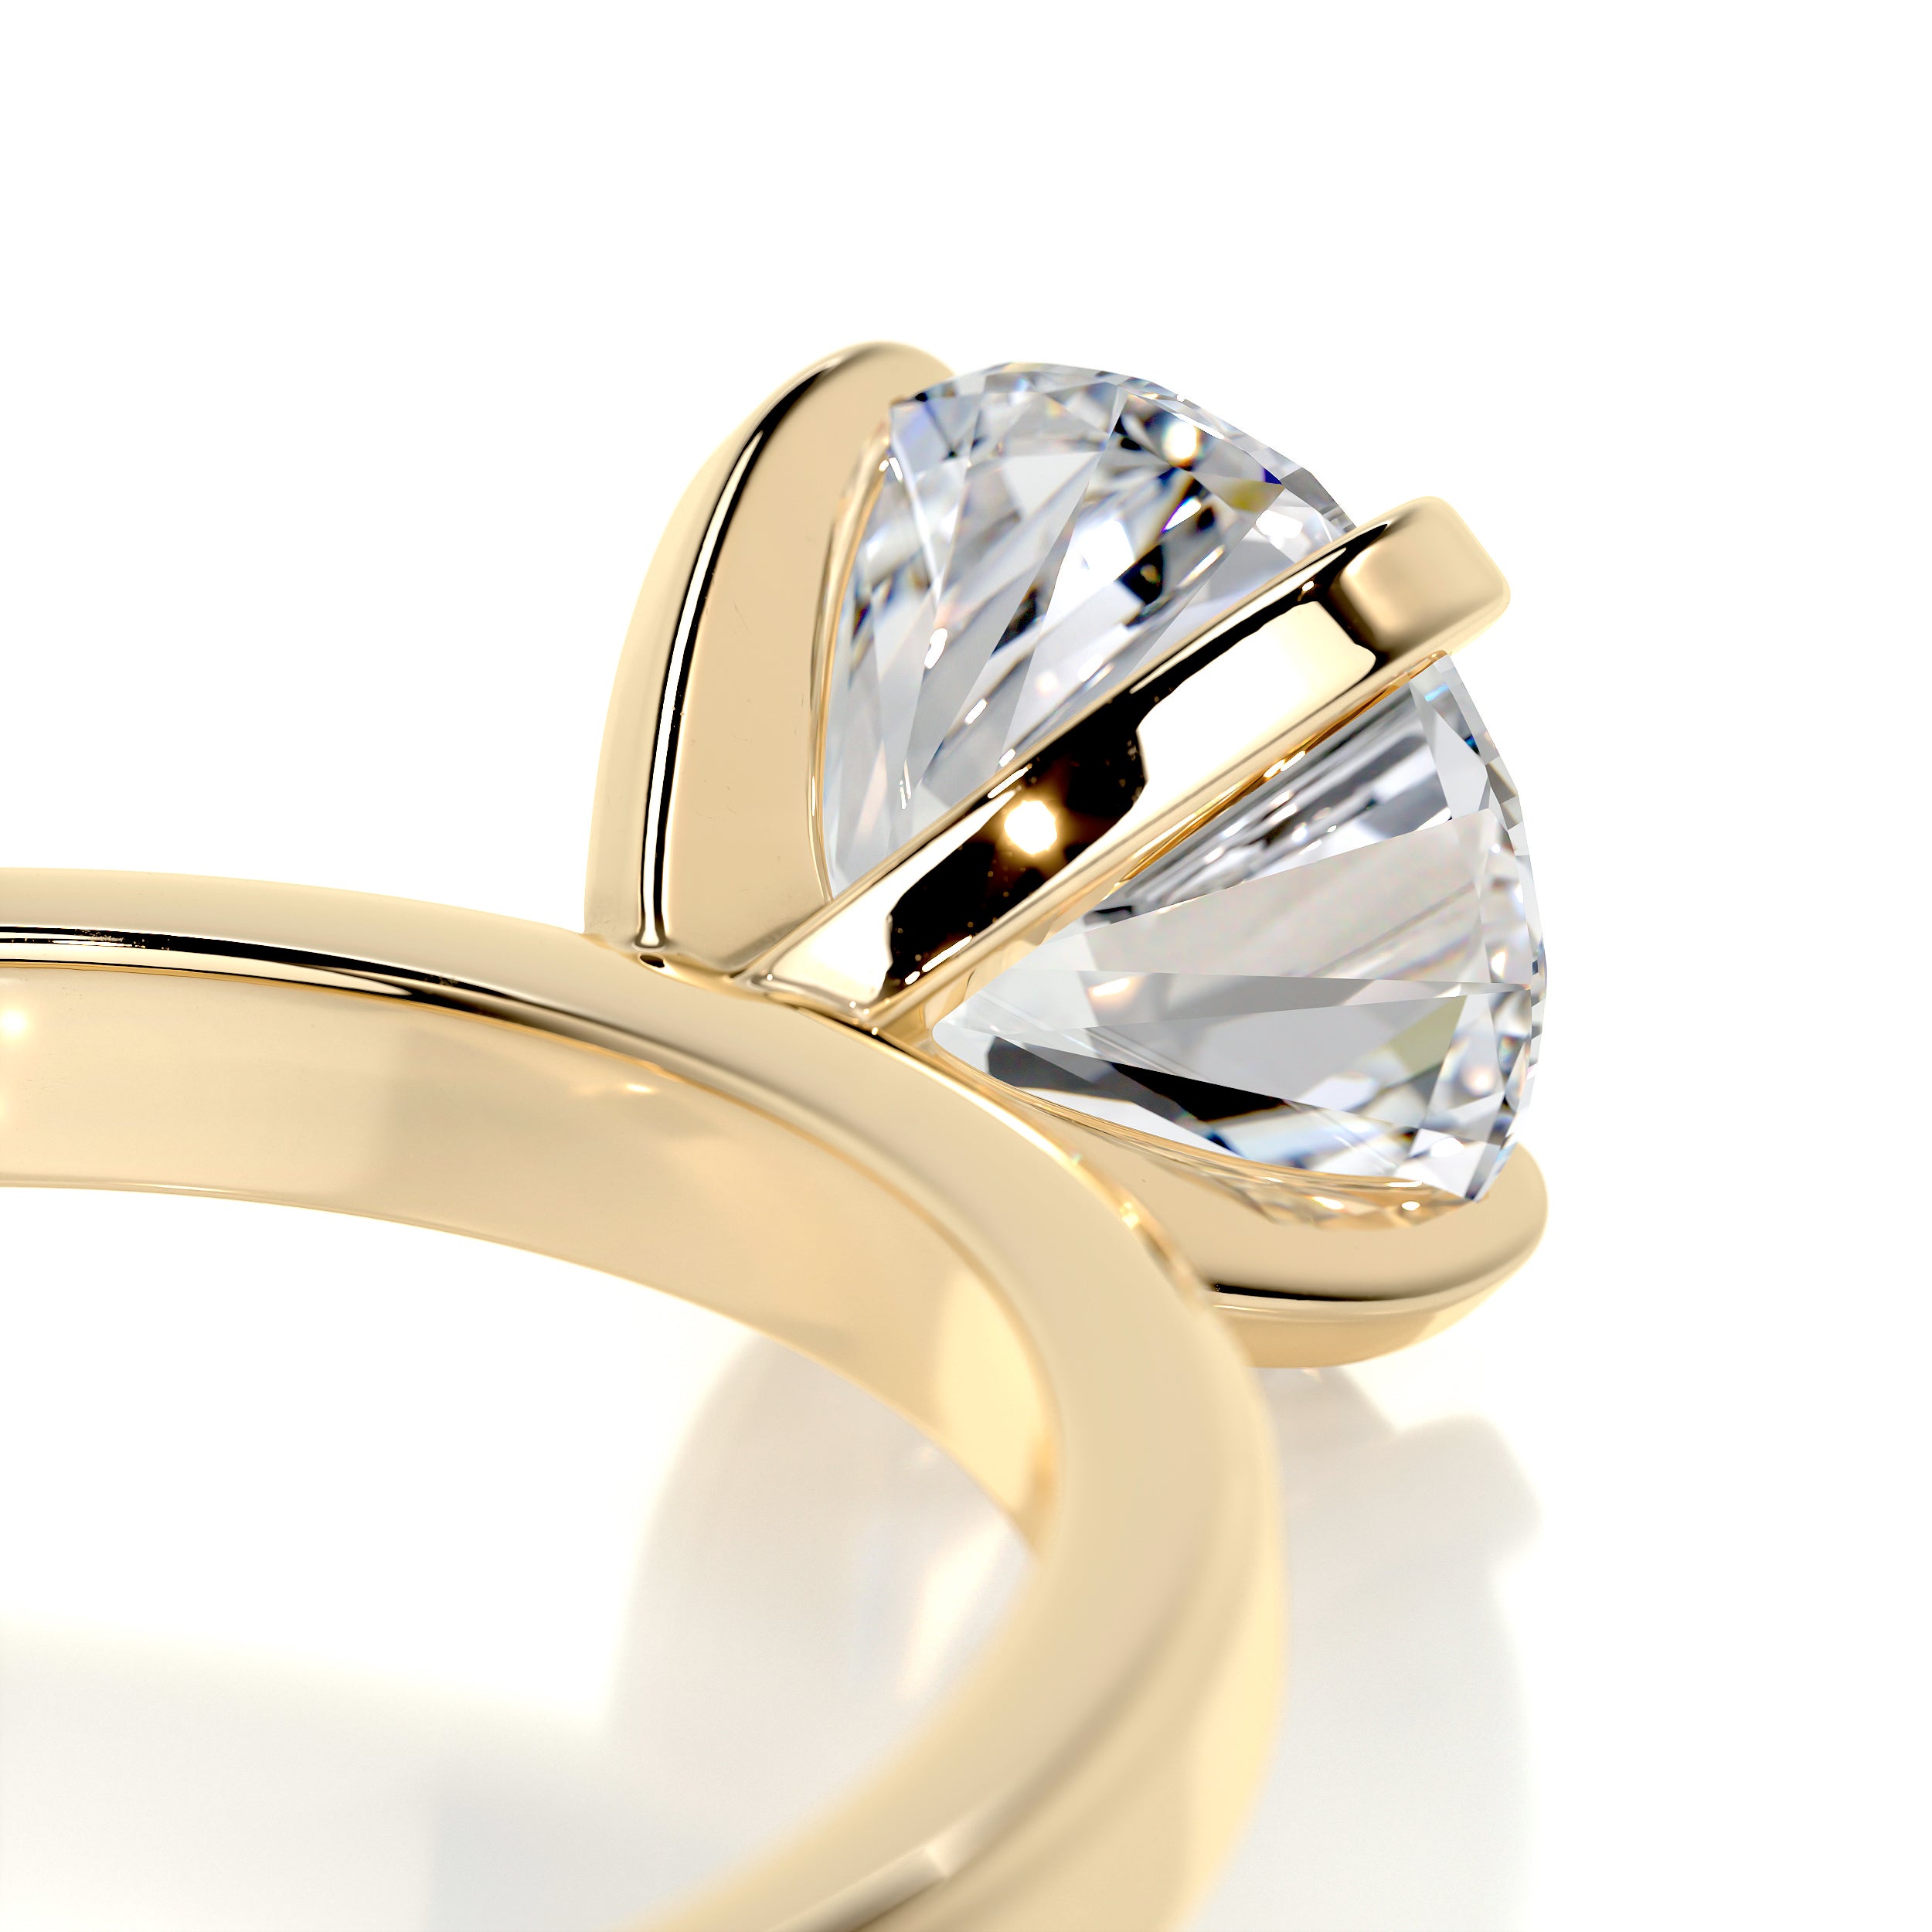 Jessica Diamond Engagement Ring   (1 Carat) -18K Yellow Gold